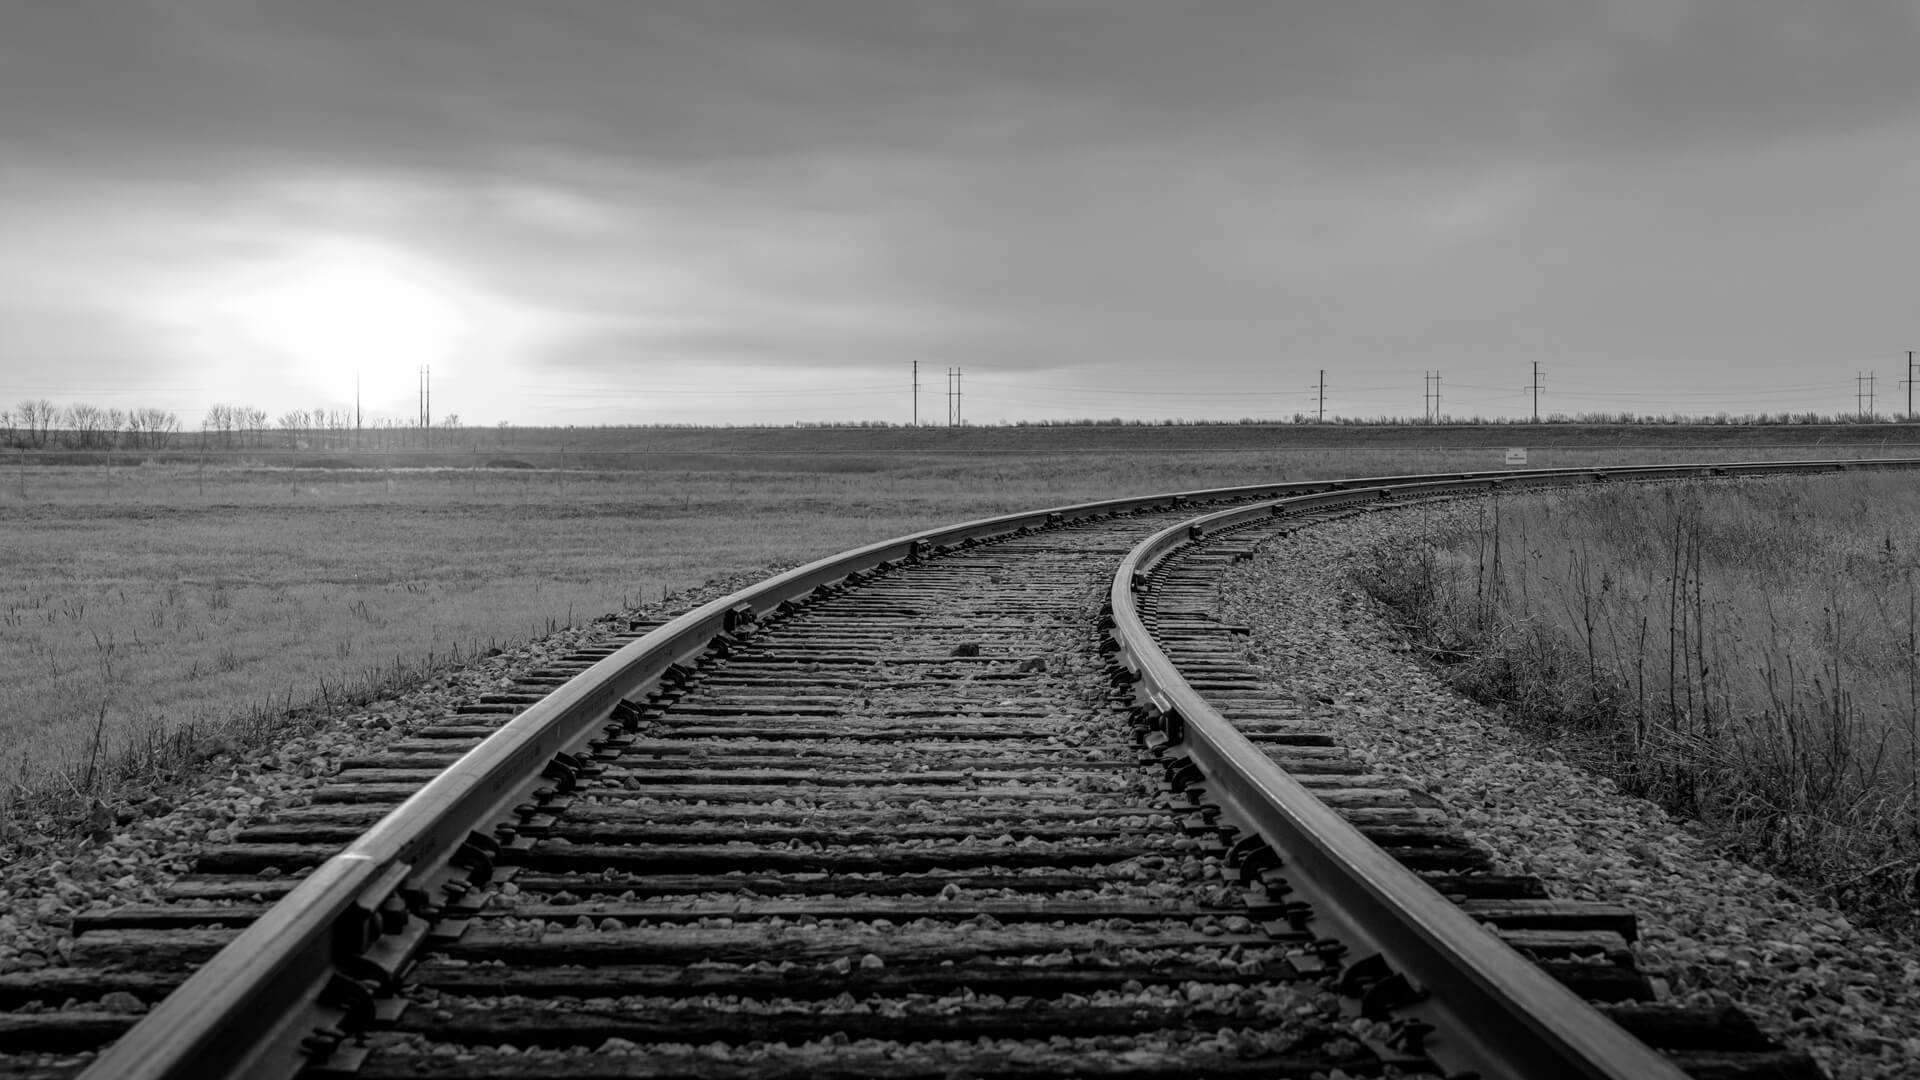 Train tracks bearing right in an empty landscape